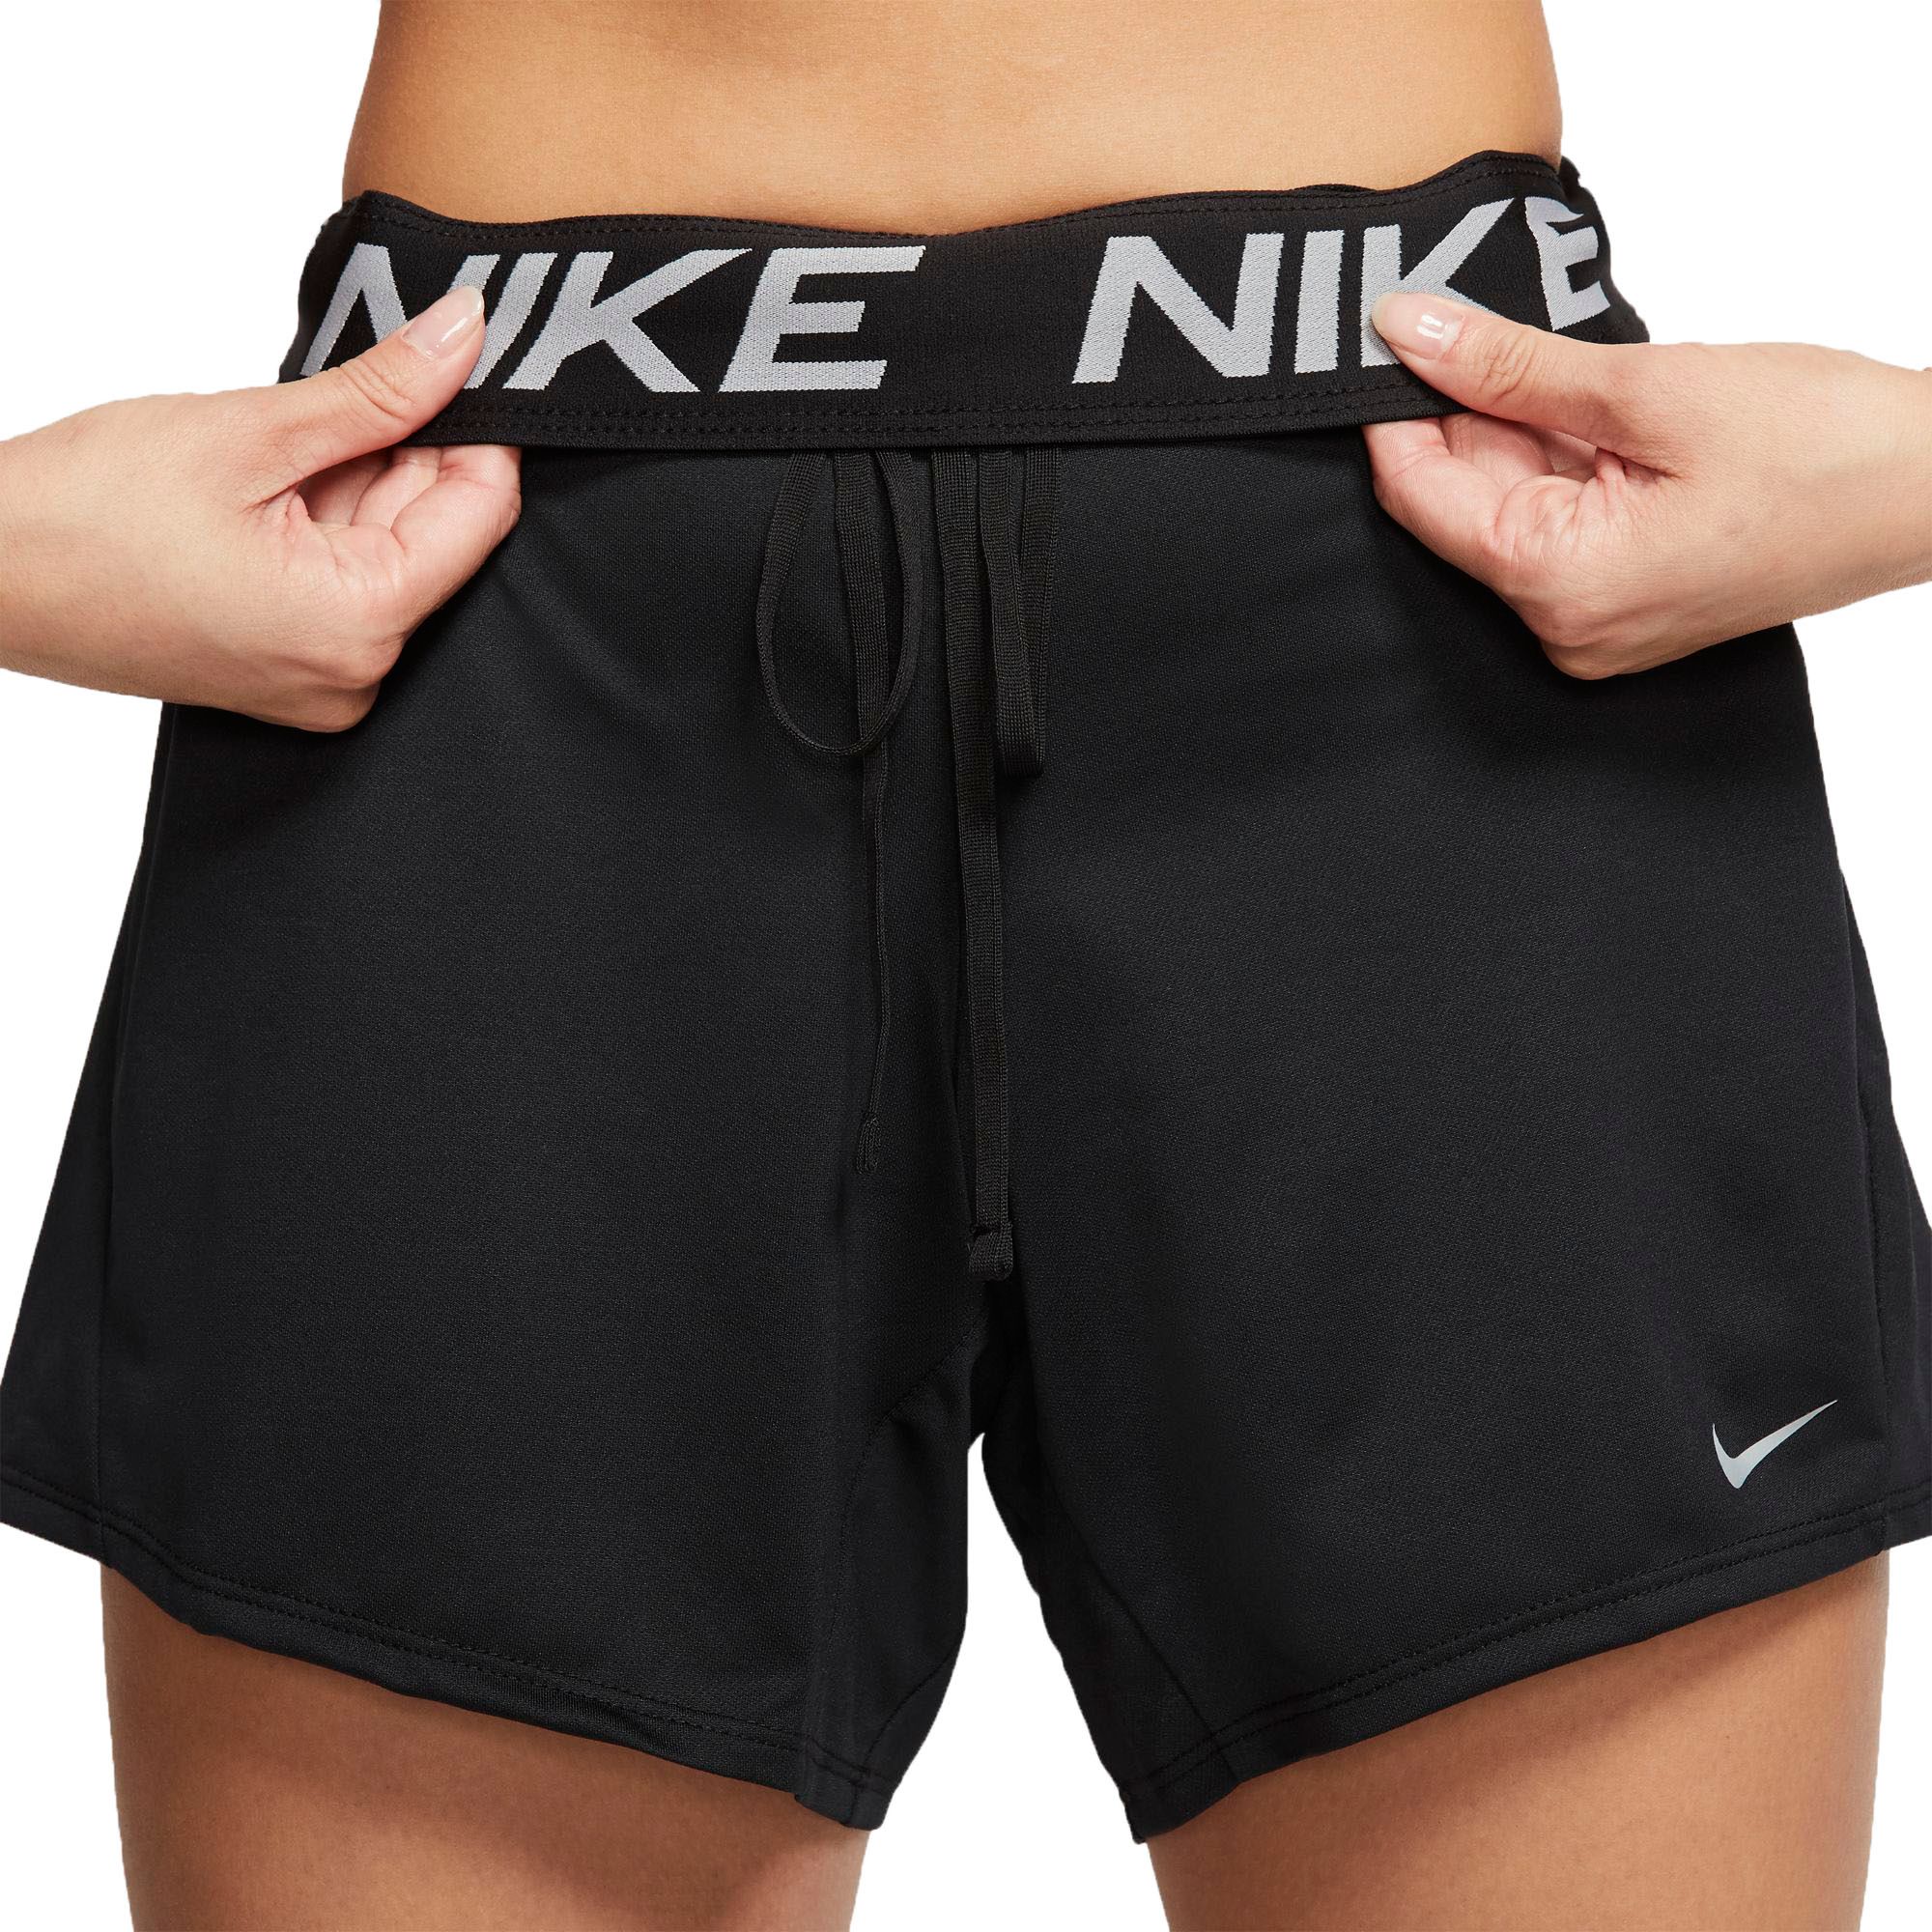 nike women's dri fit training shorts